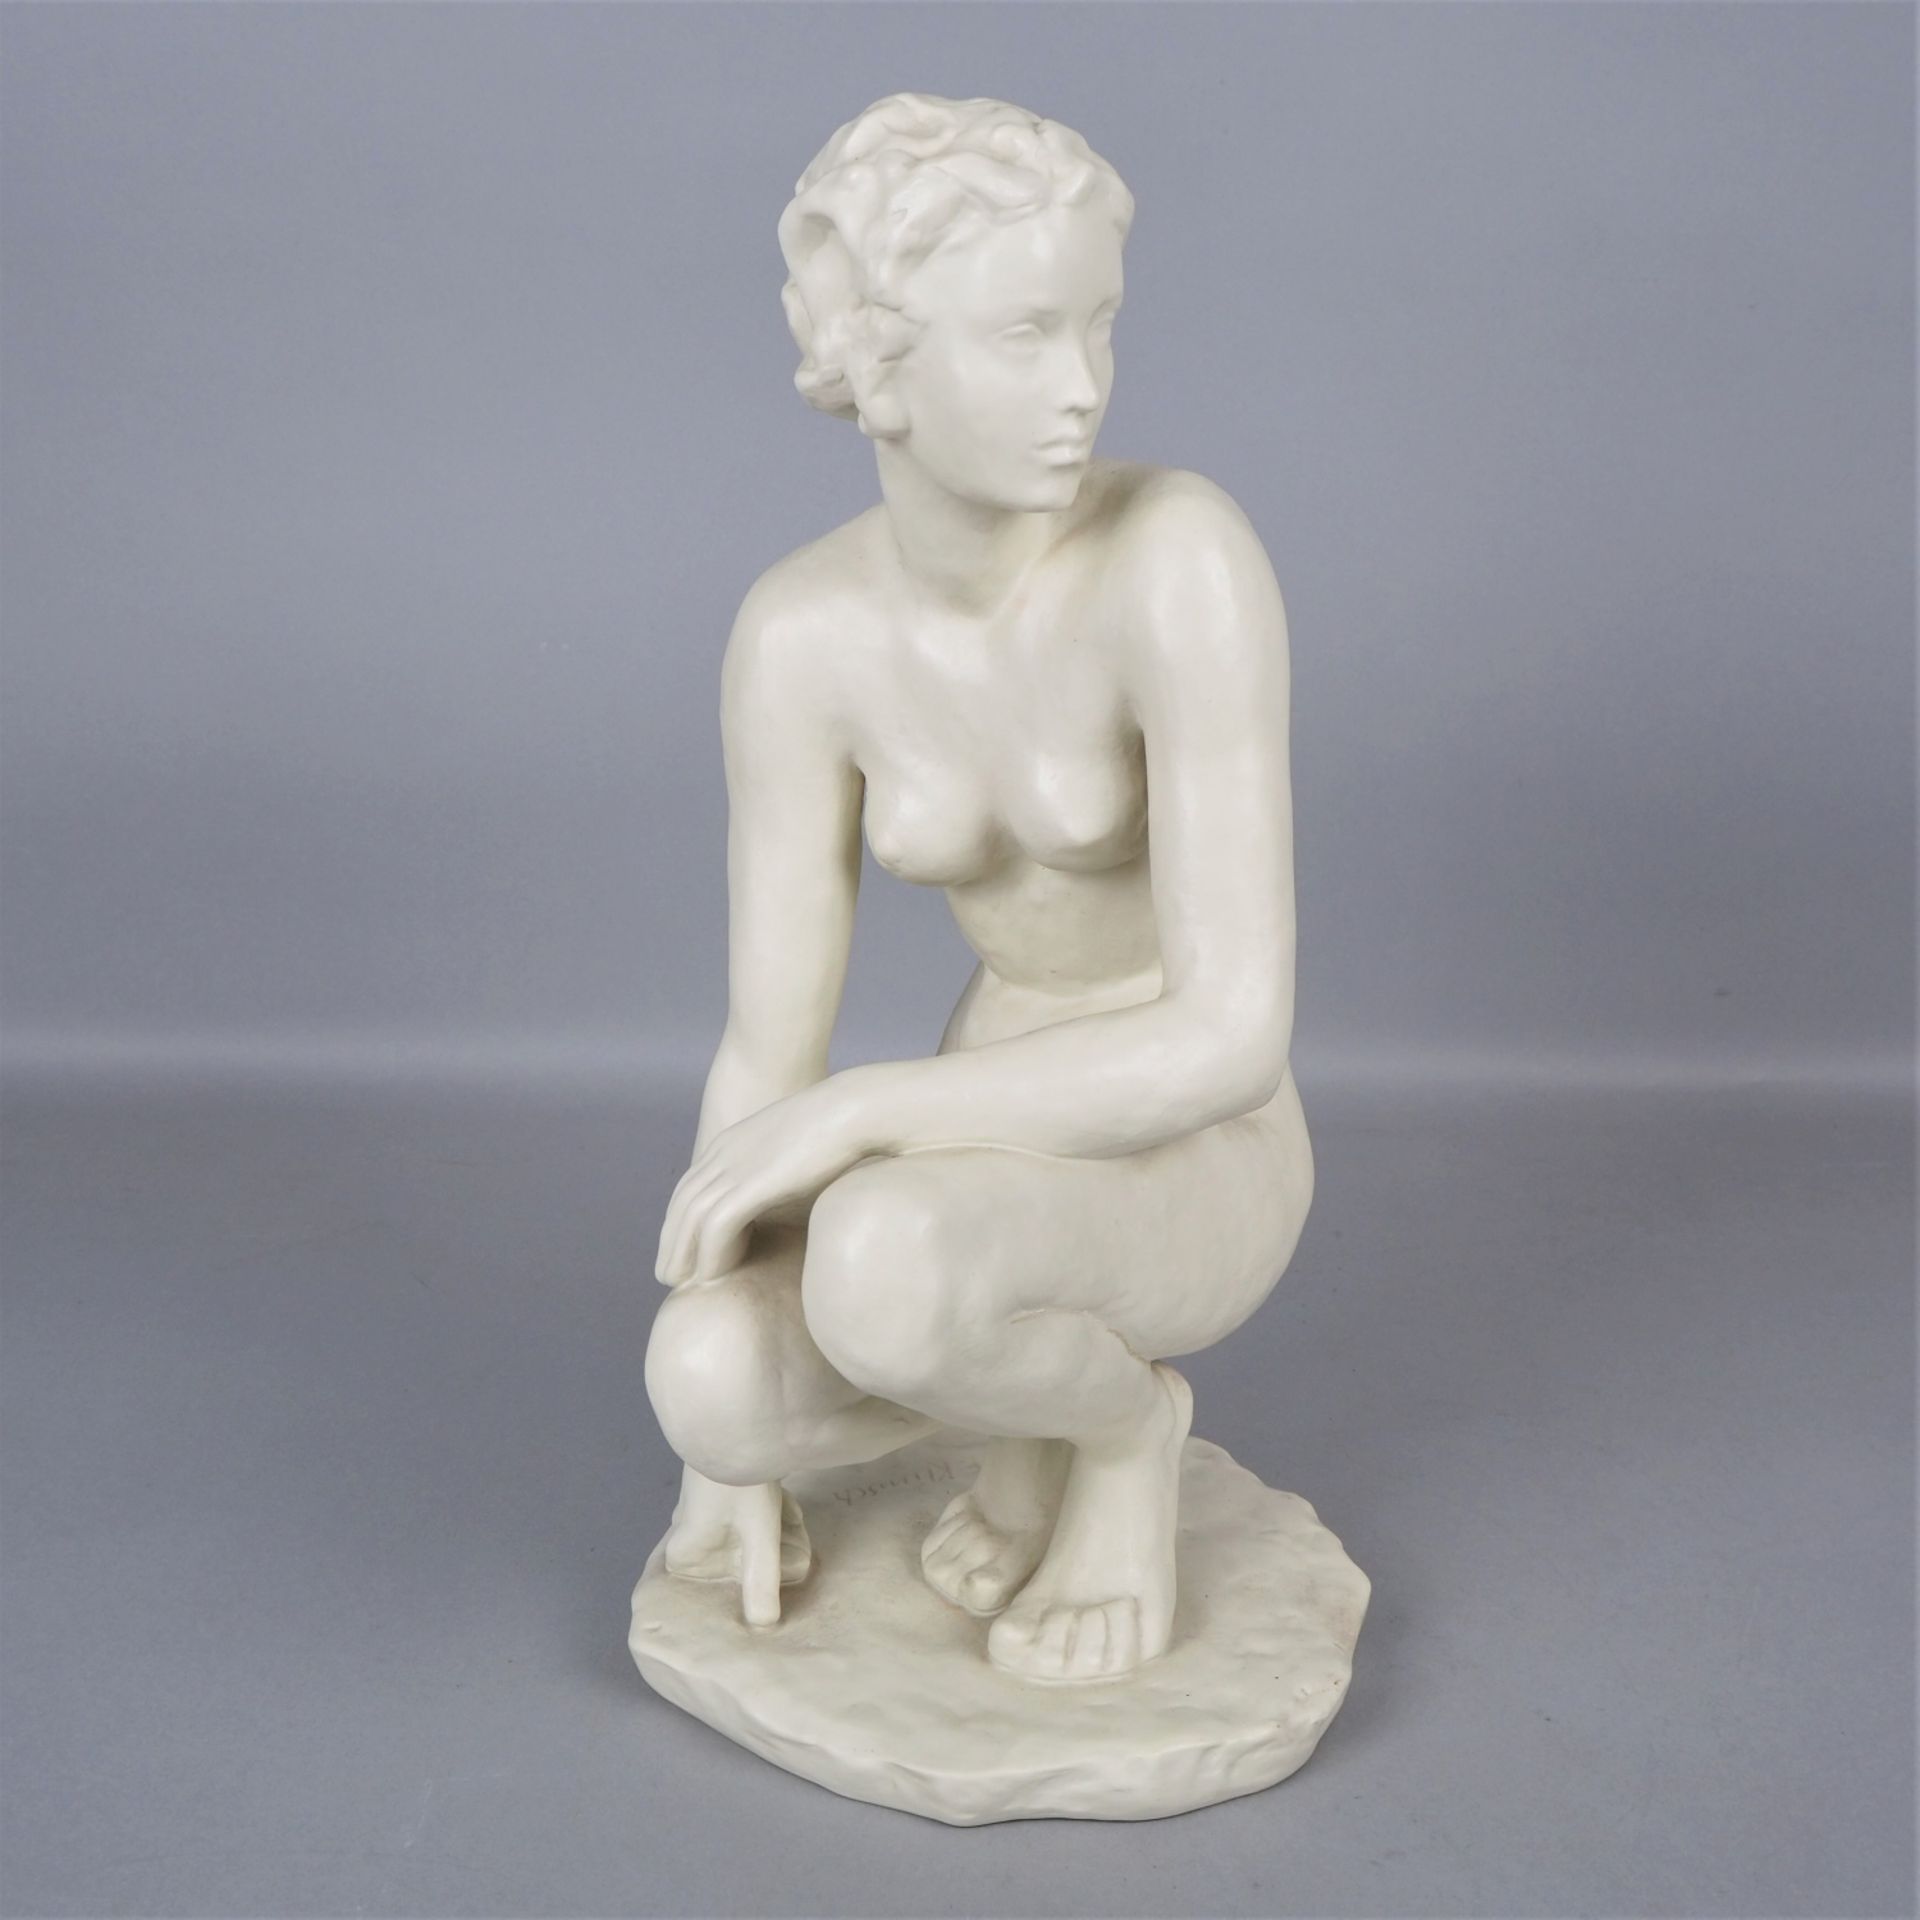 Rosenthal, porcelain figure "The squatting", around 1938.